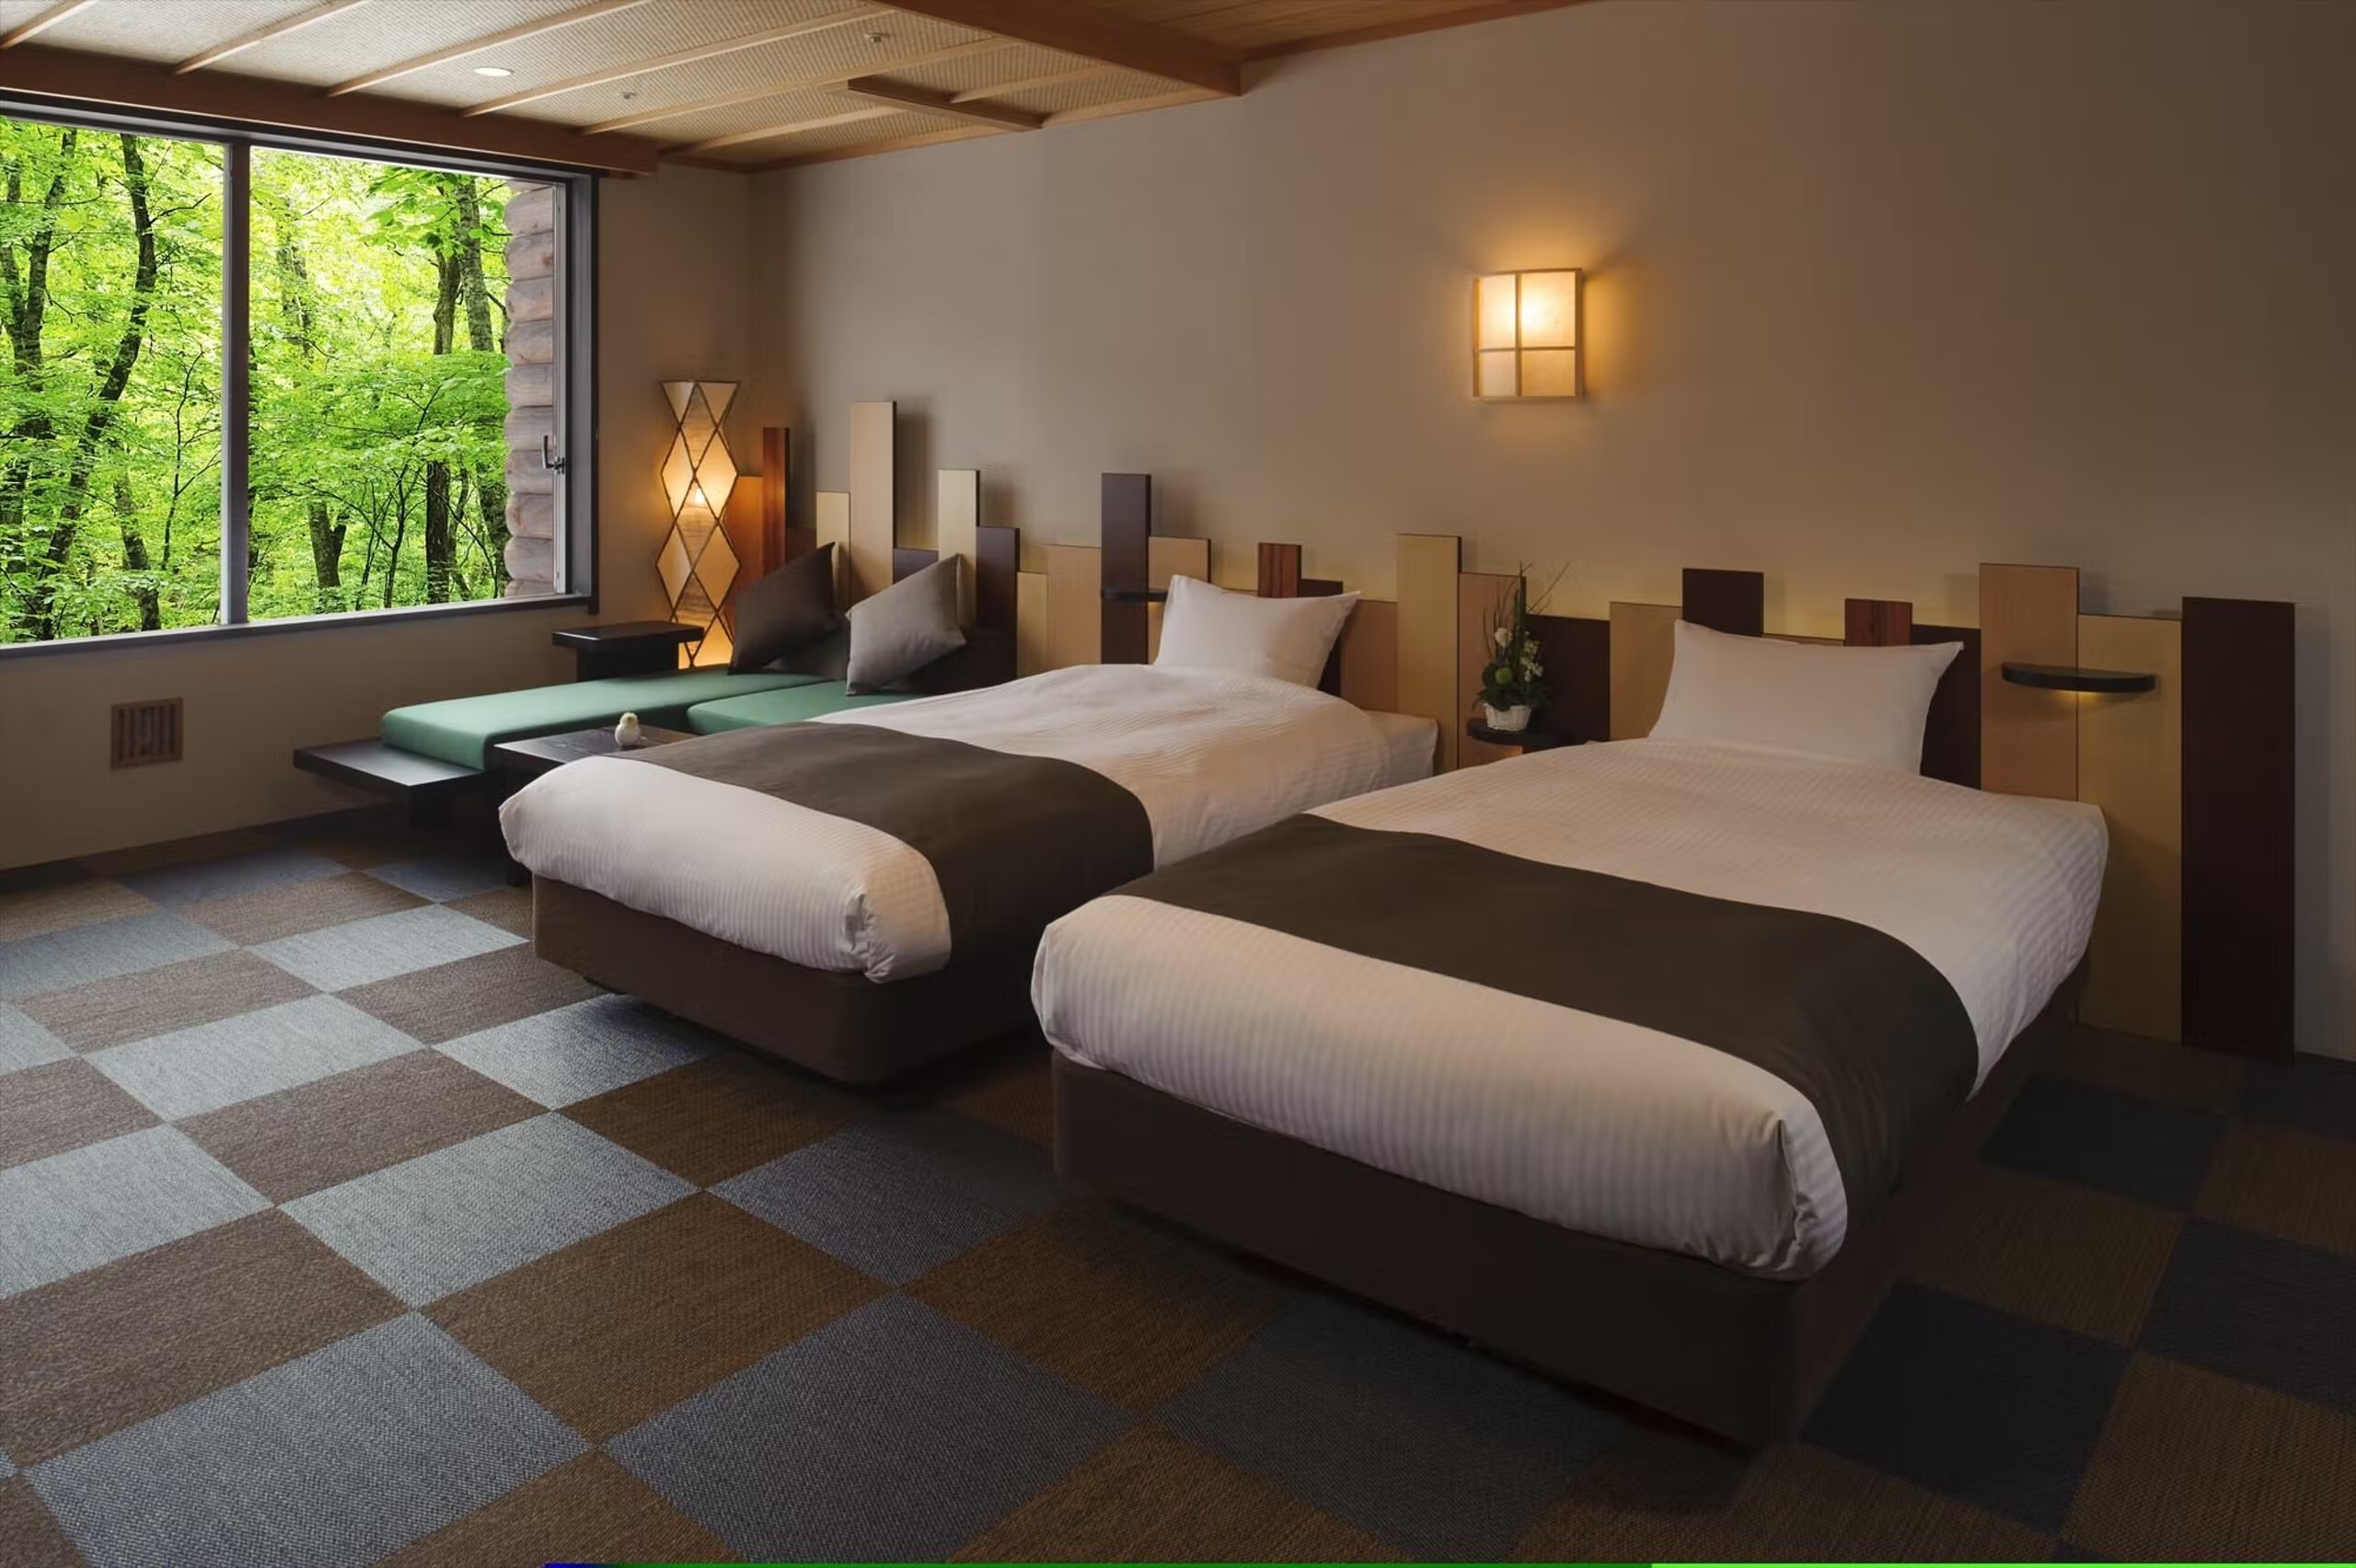 Rooms at Hoshino Resort Oirase Keiryu Hotel